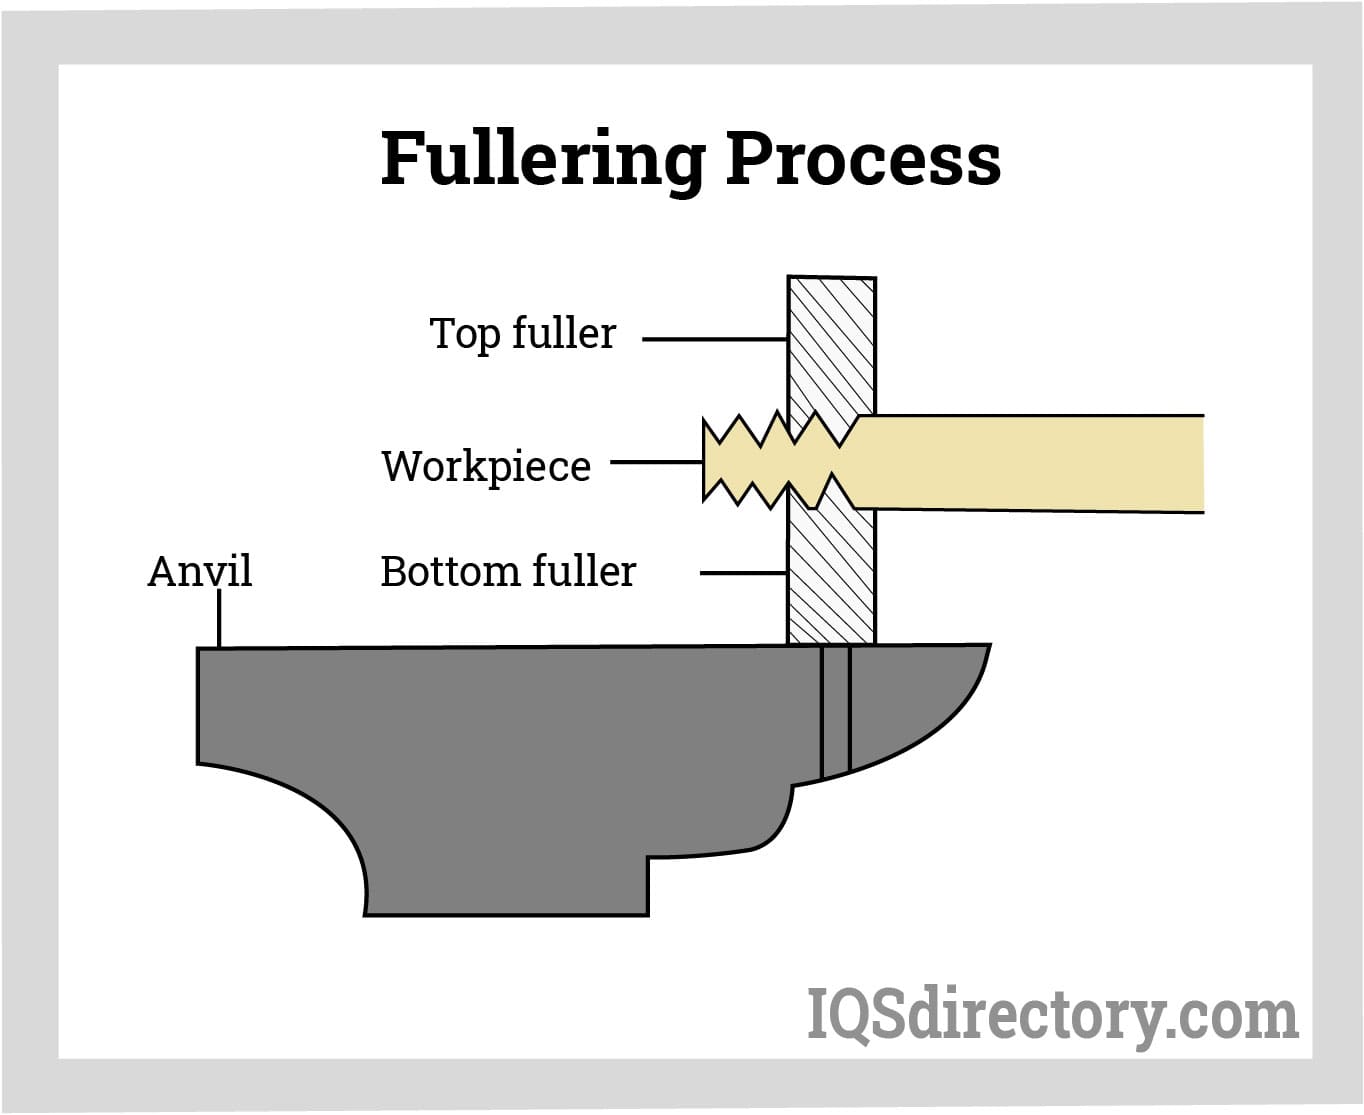 Fullering Process